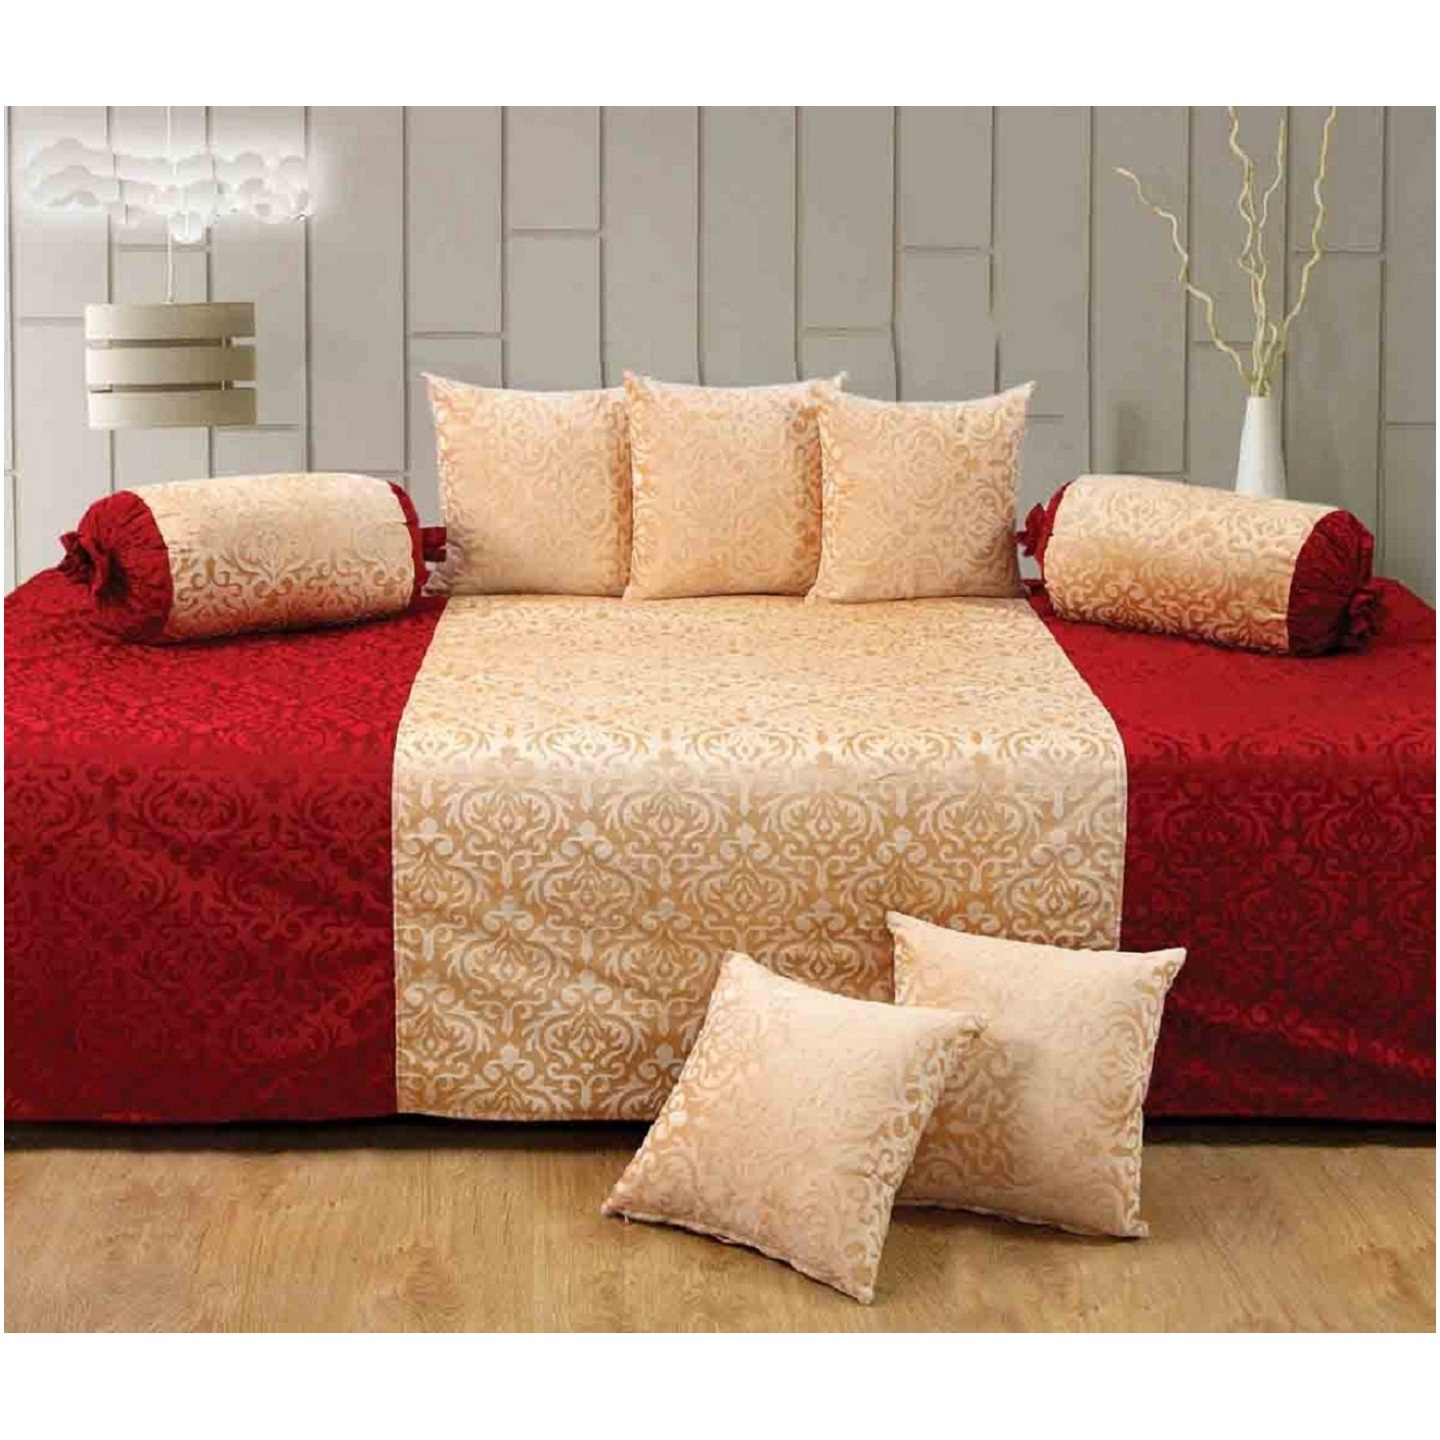 Handtex home Maroon - Beige Velvet Diwan Set(content: 1 Single Bed Sheet, 5 Cushion Cover, 2 Bolster, Total - 8 Pcs Set,)